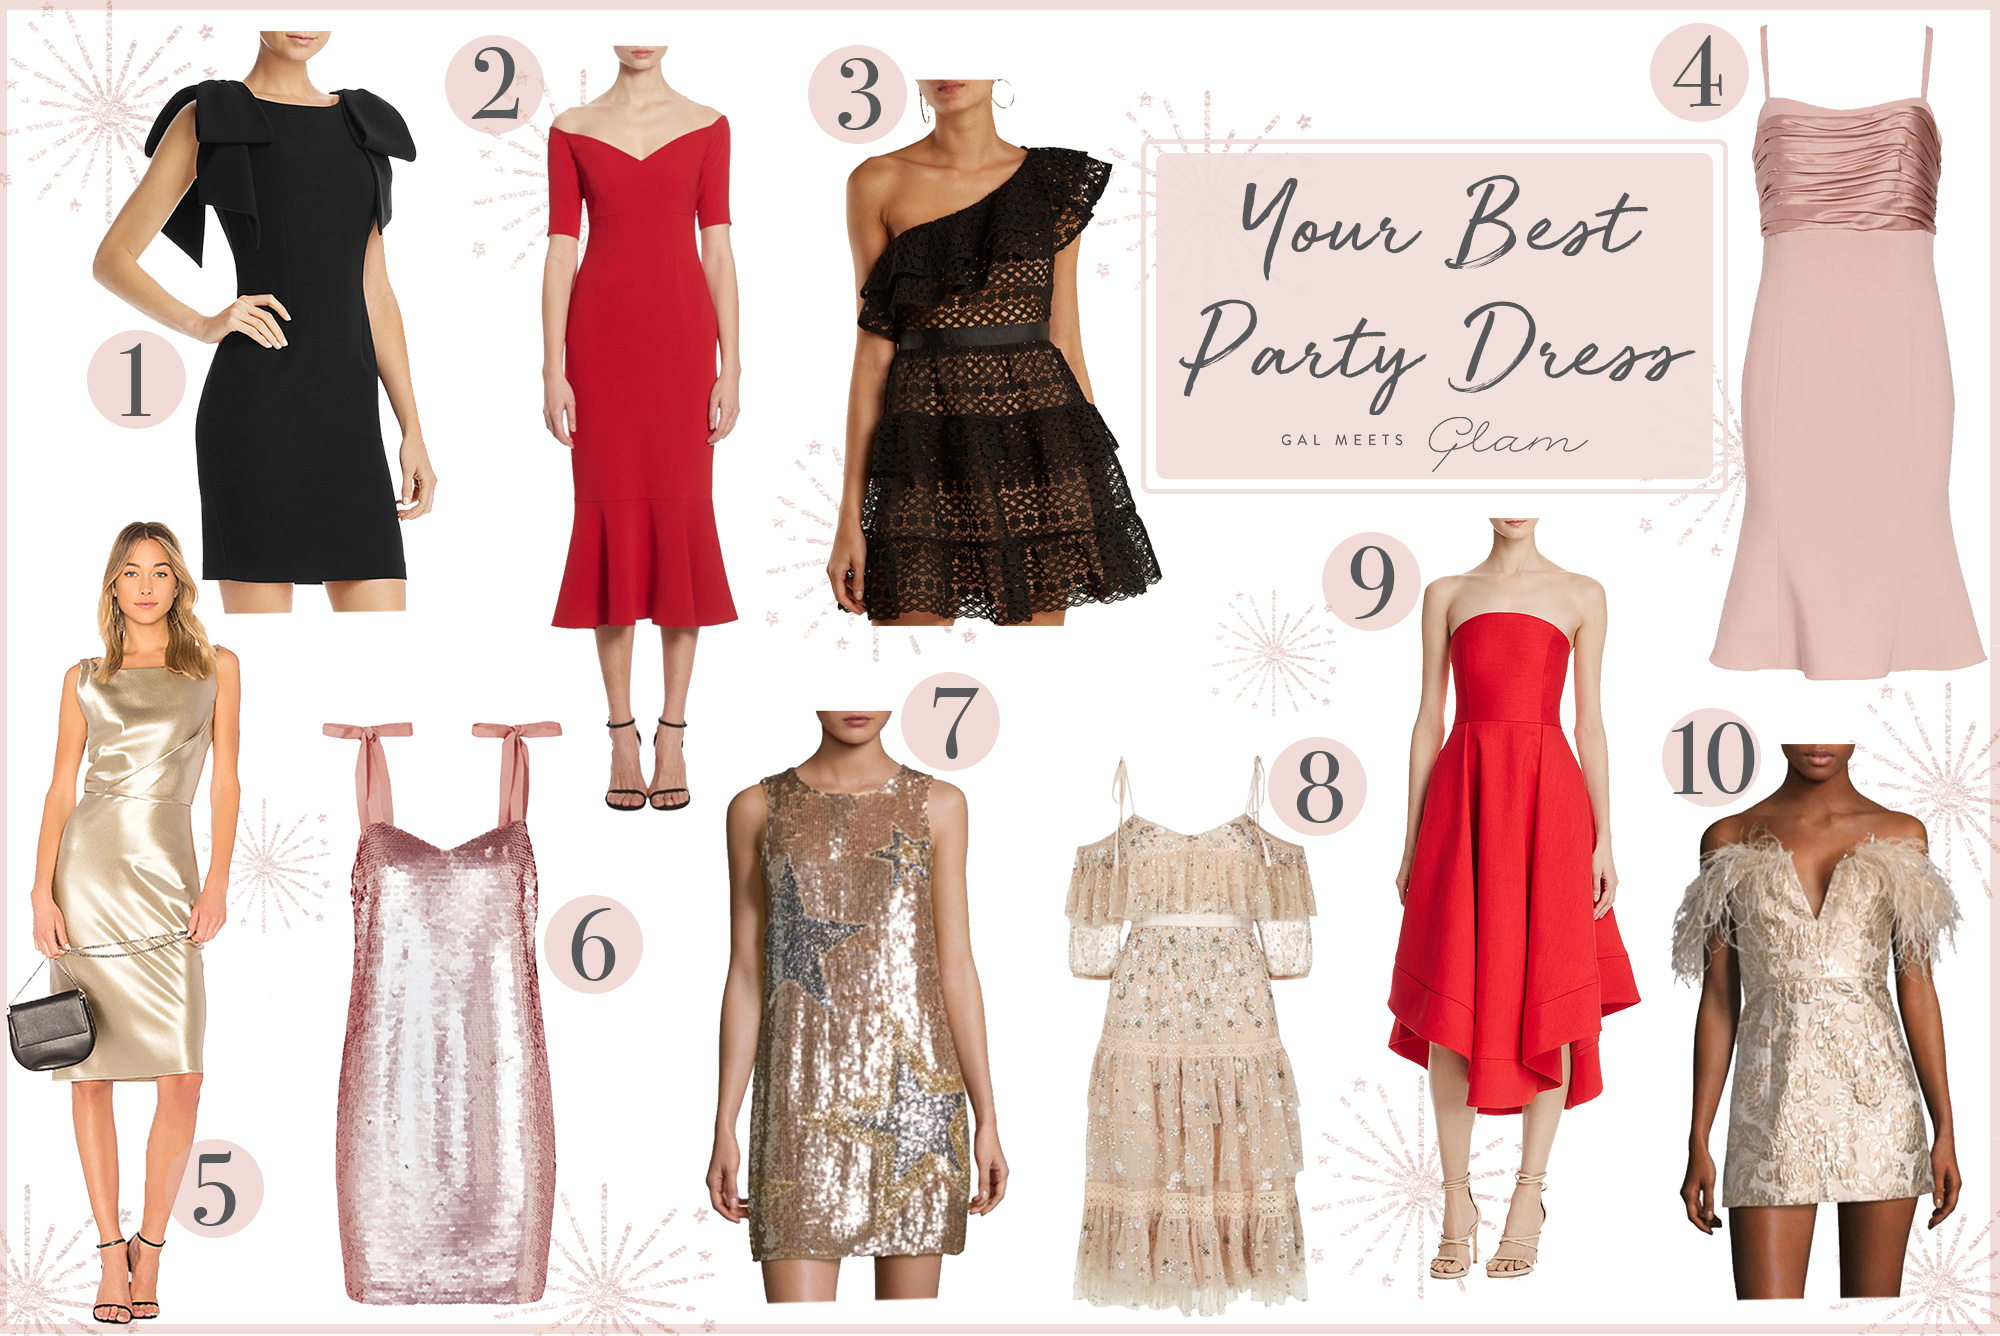 The Best Party Dresses For NYE - Julia Berolzheimer